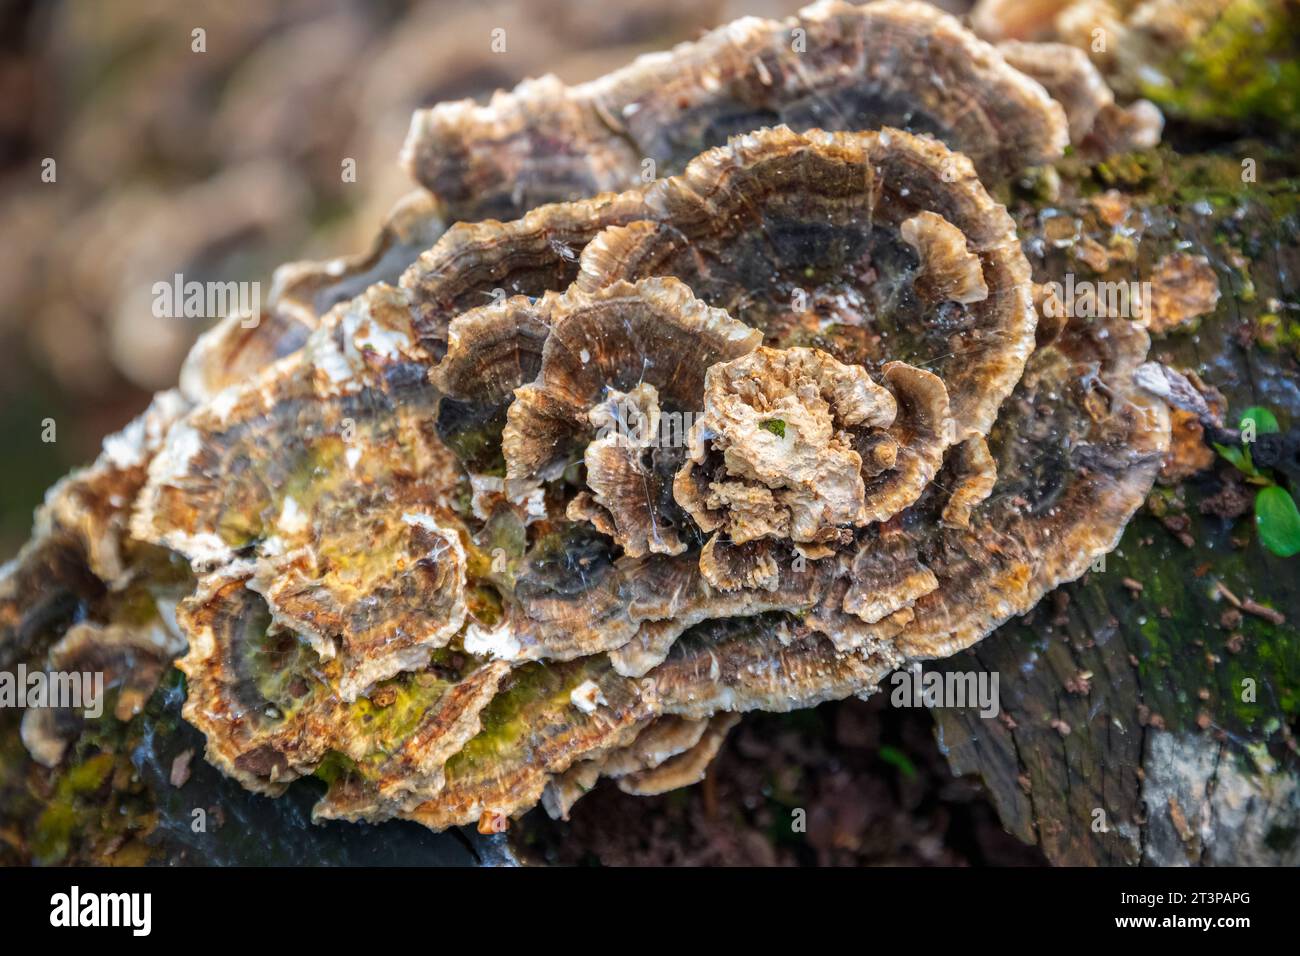 Fungus growing on tree stump in Highgate wood, London Stock Photo